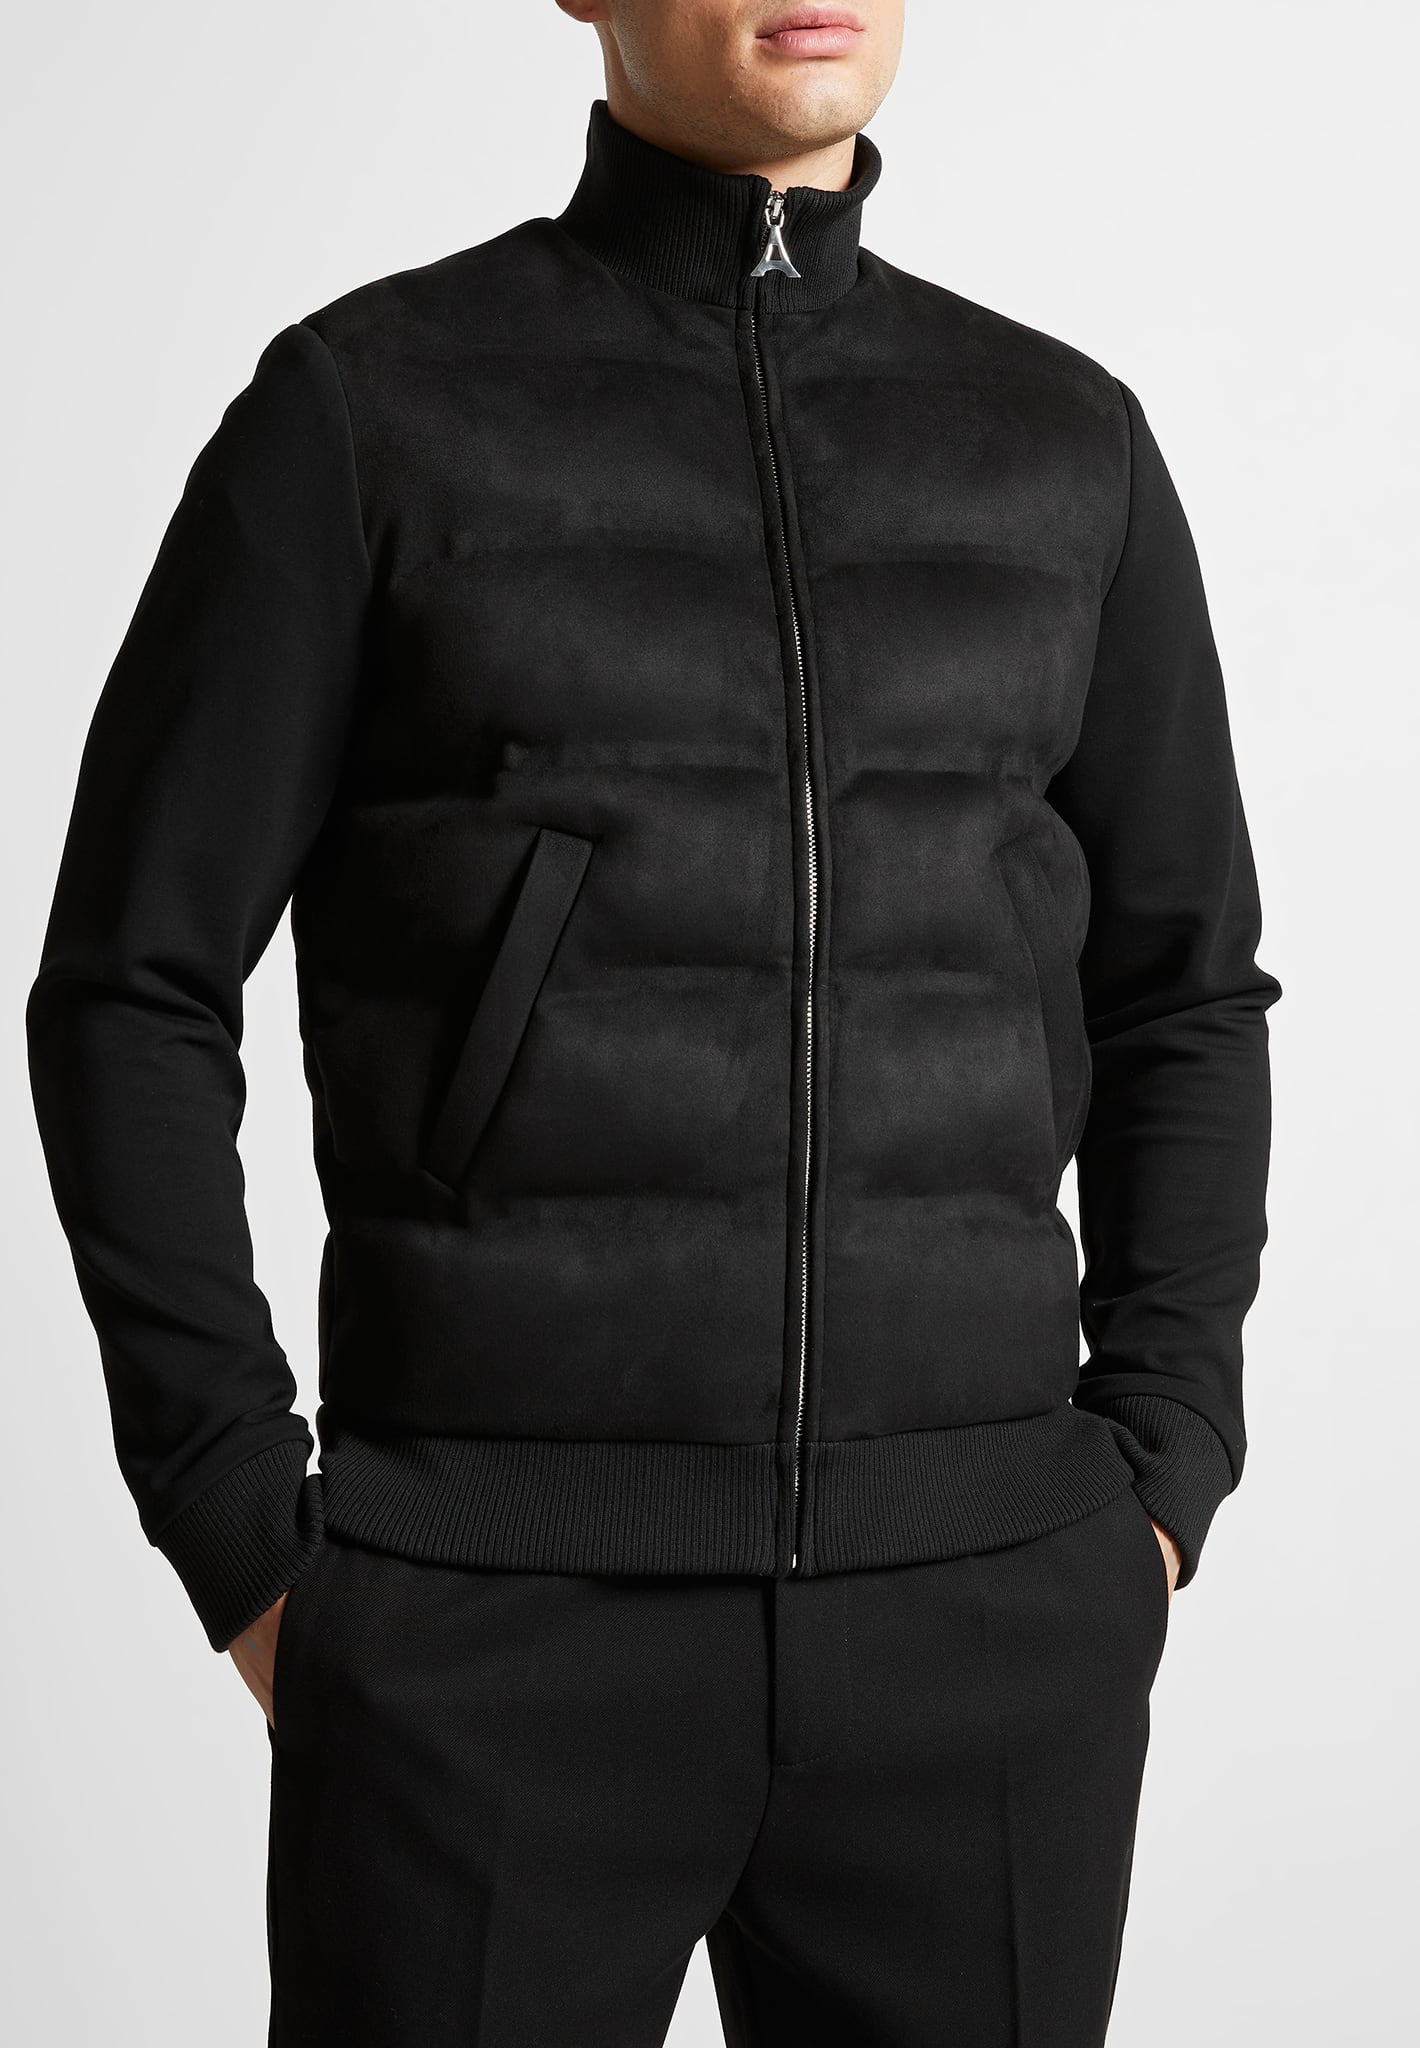 suede-jersey-heat-seal-jacket-black